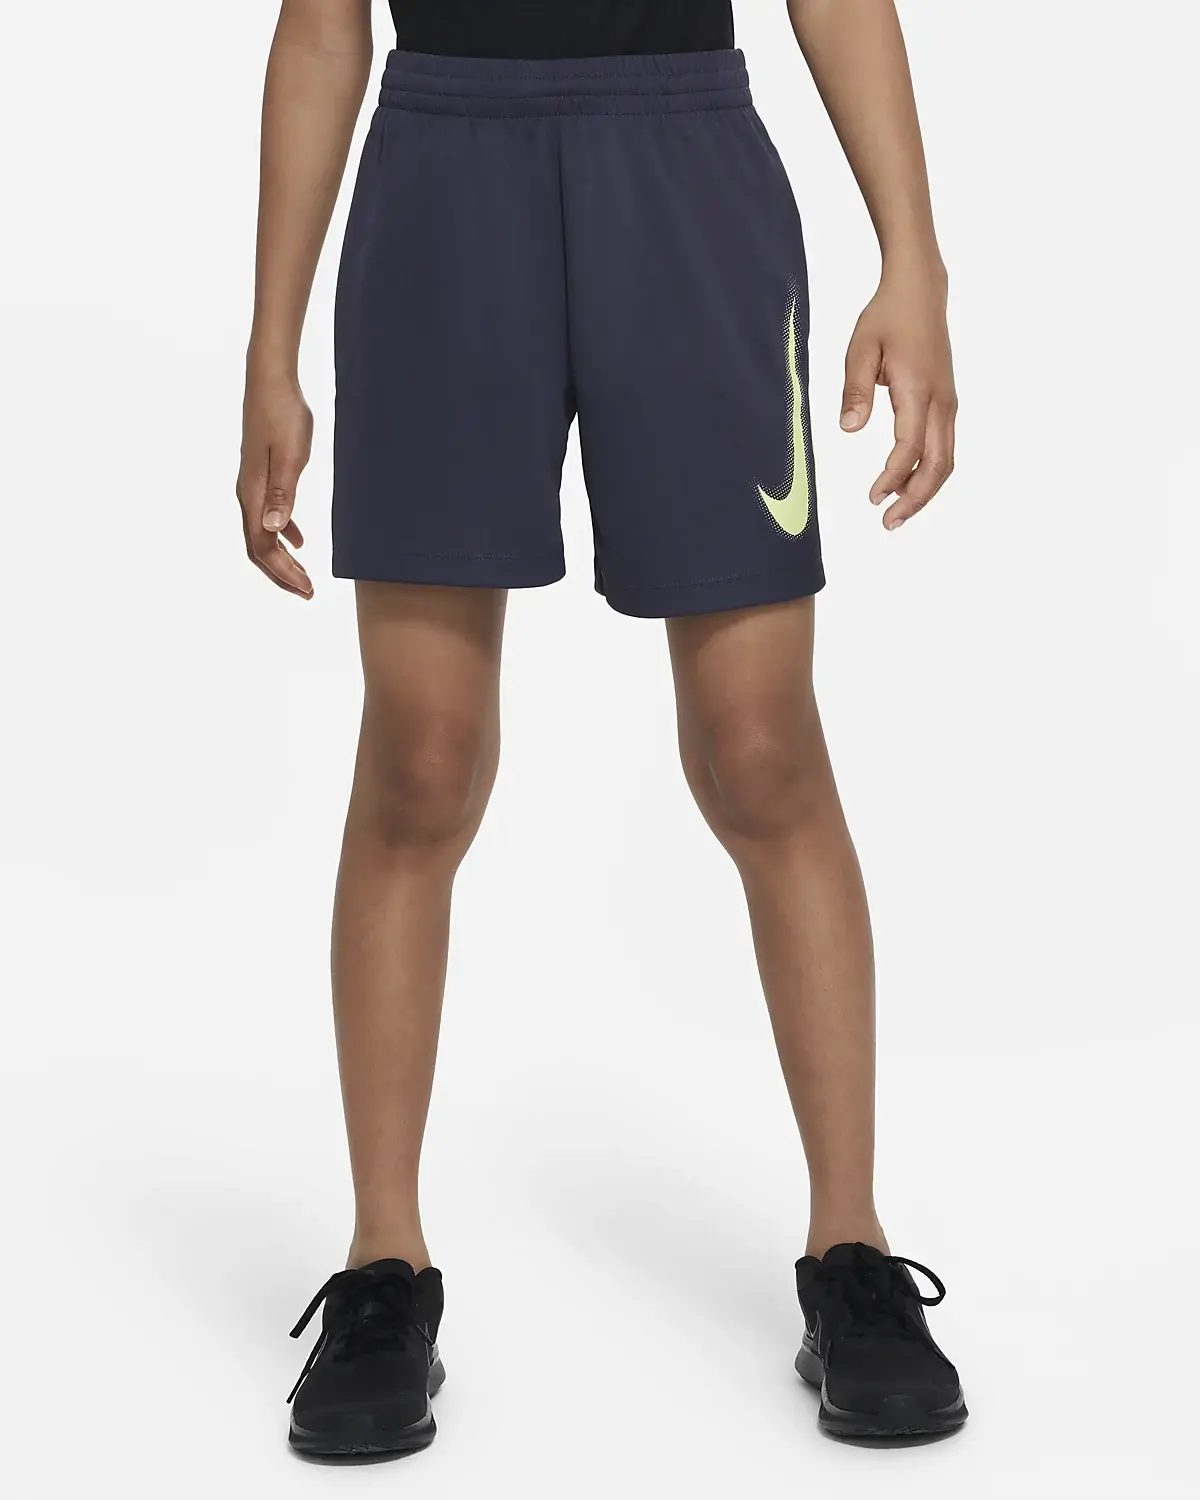 Nike Multi. 1